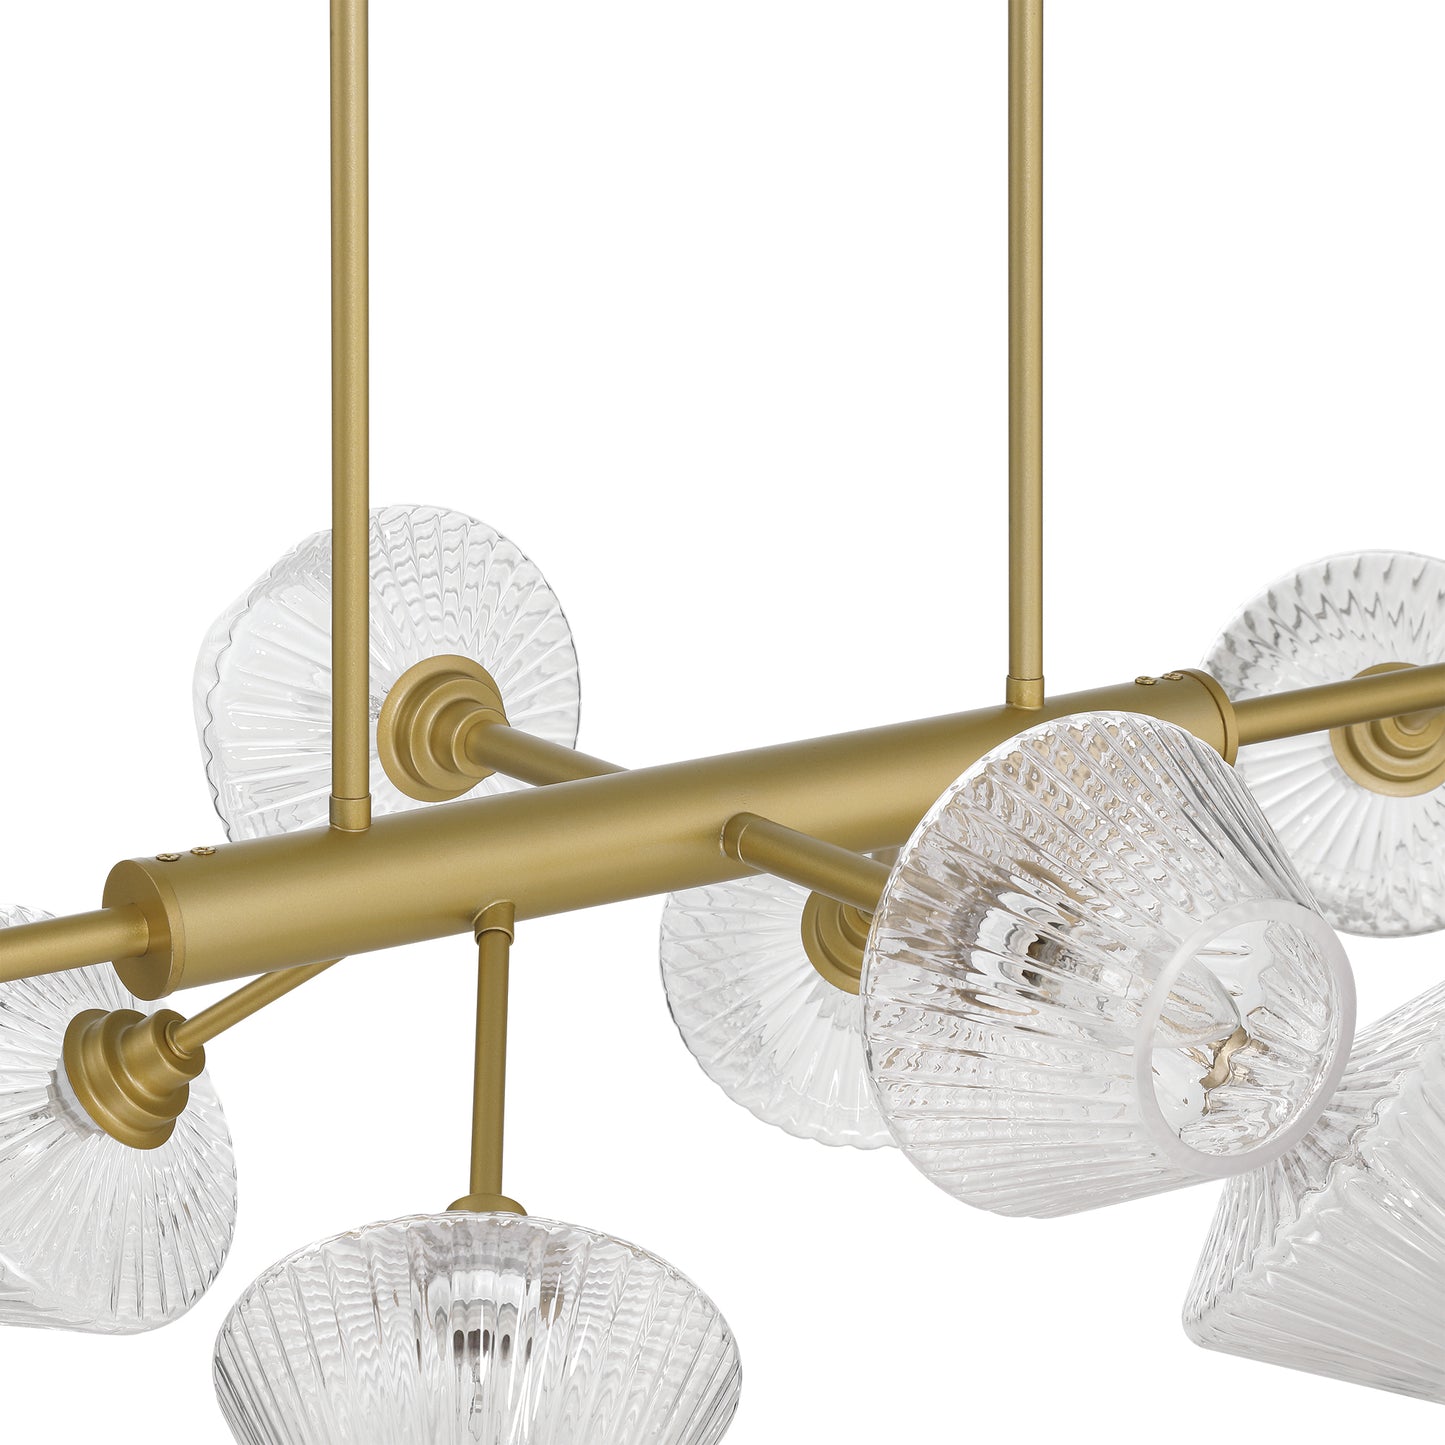 12 light sputnik empire chandelier (10) by ACROMA